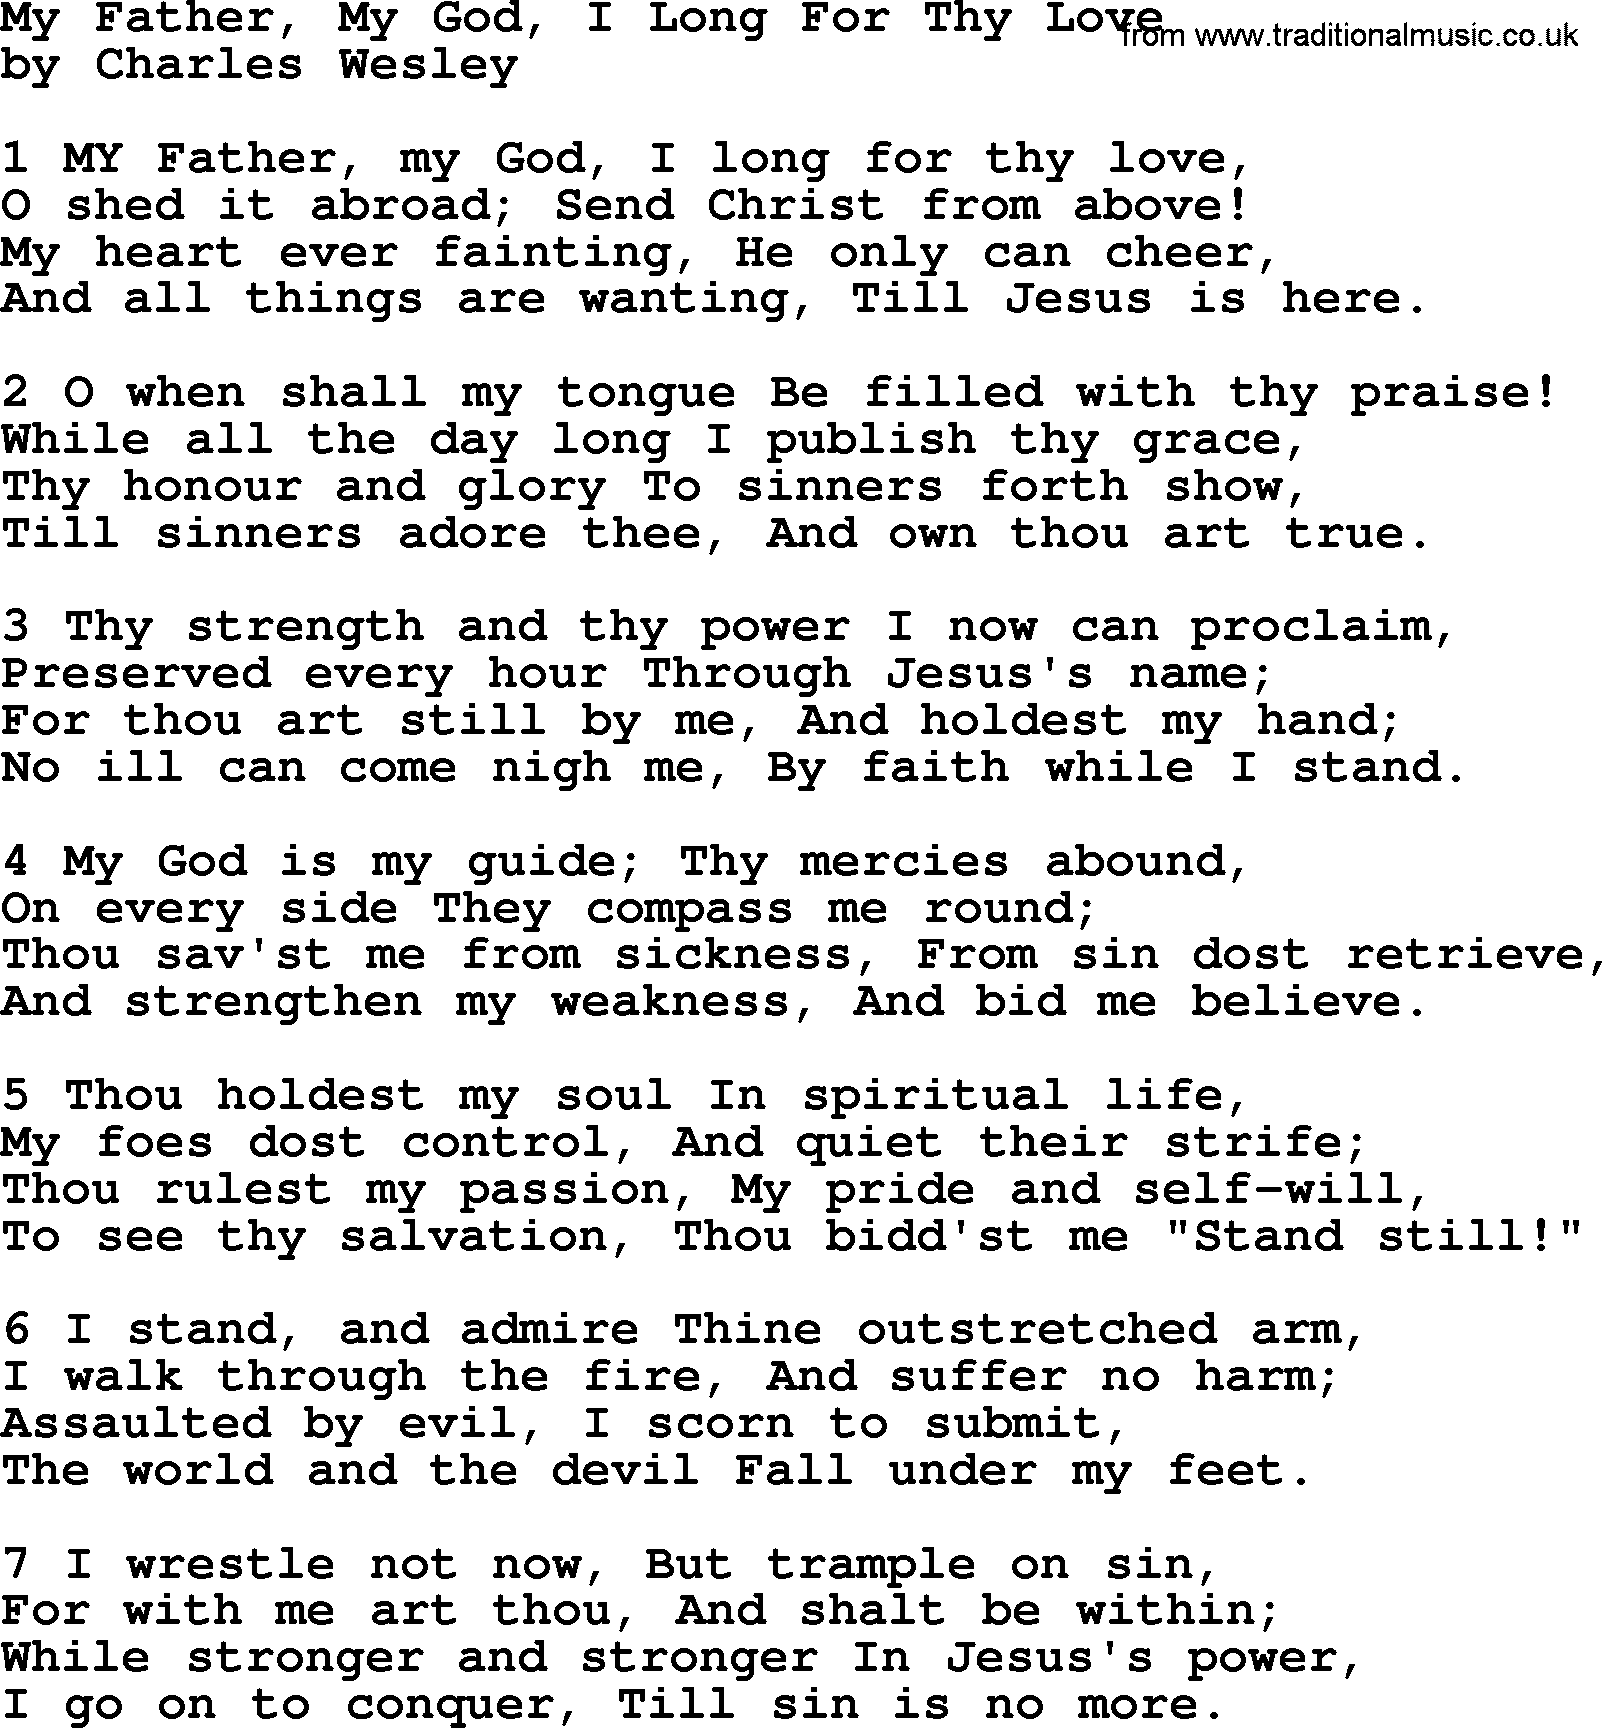 Charles Wesley hymn: My Father, My God, I Long For Thy Love, lyrics